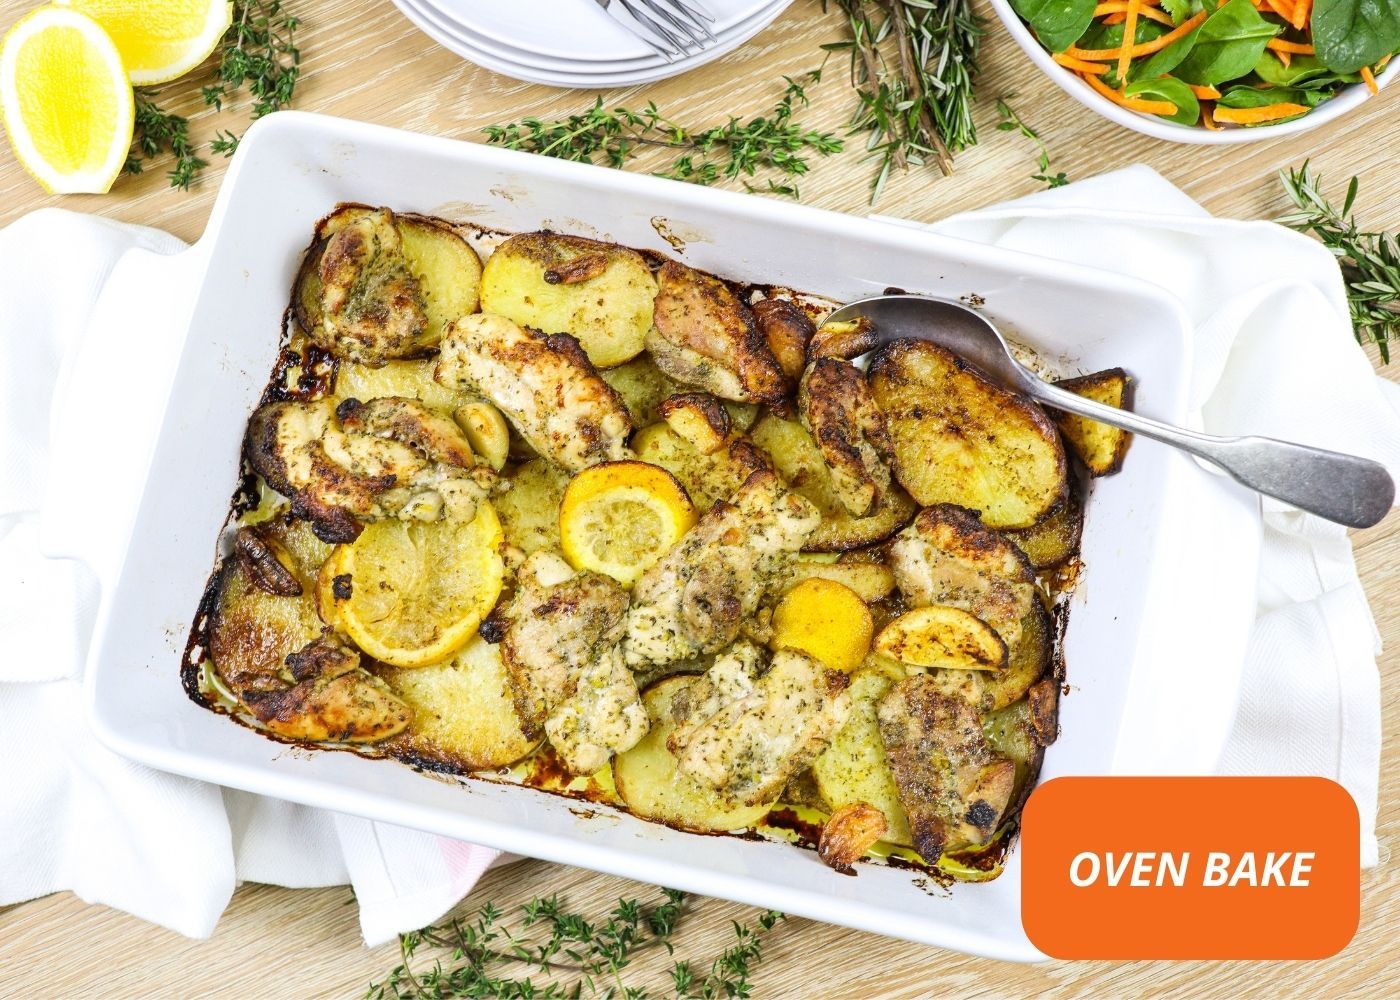 Greek style roast chicken - serves 4-5